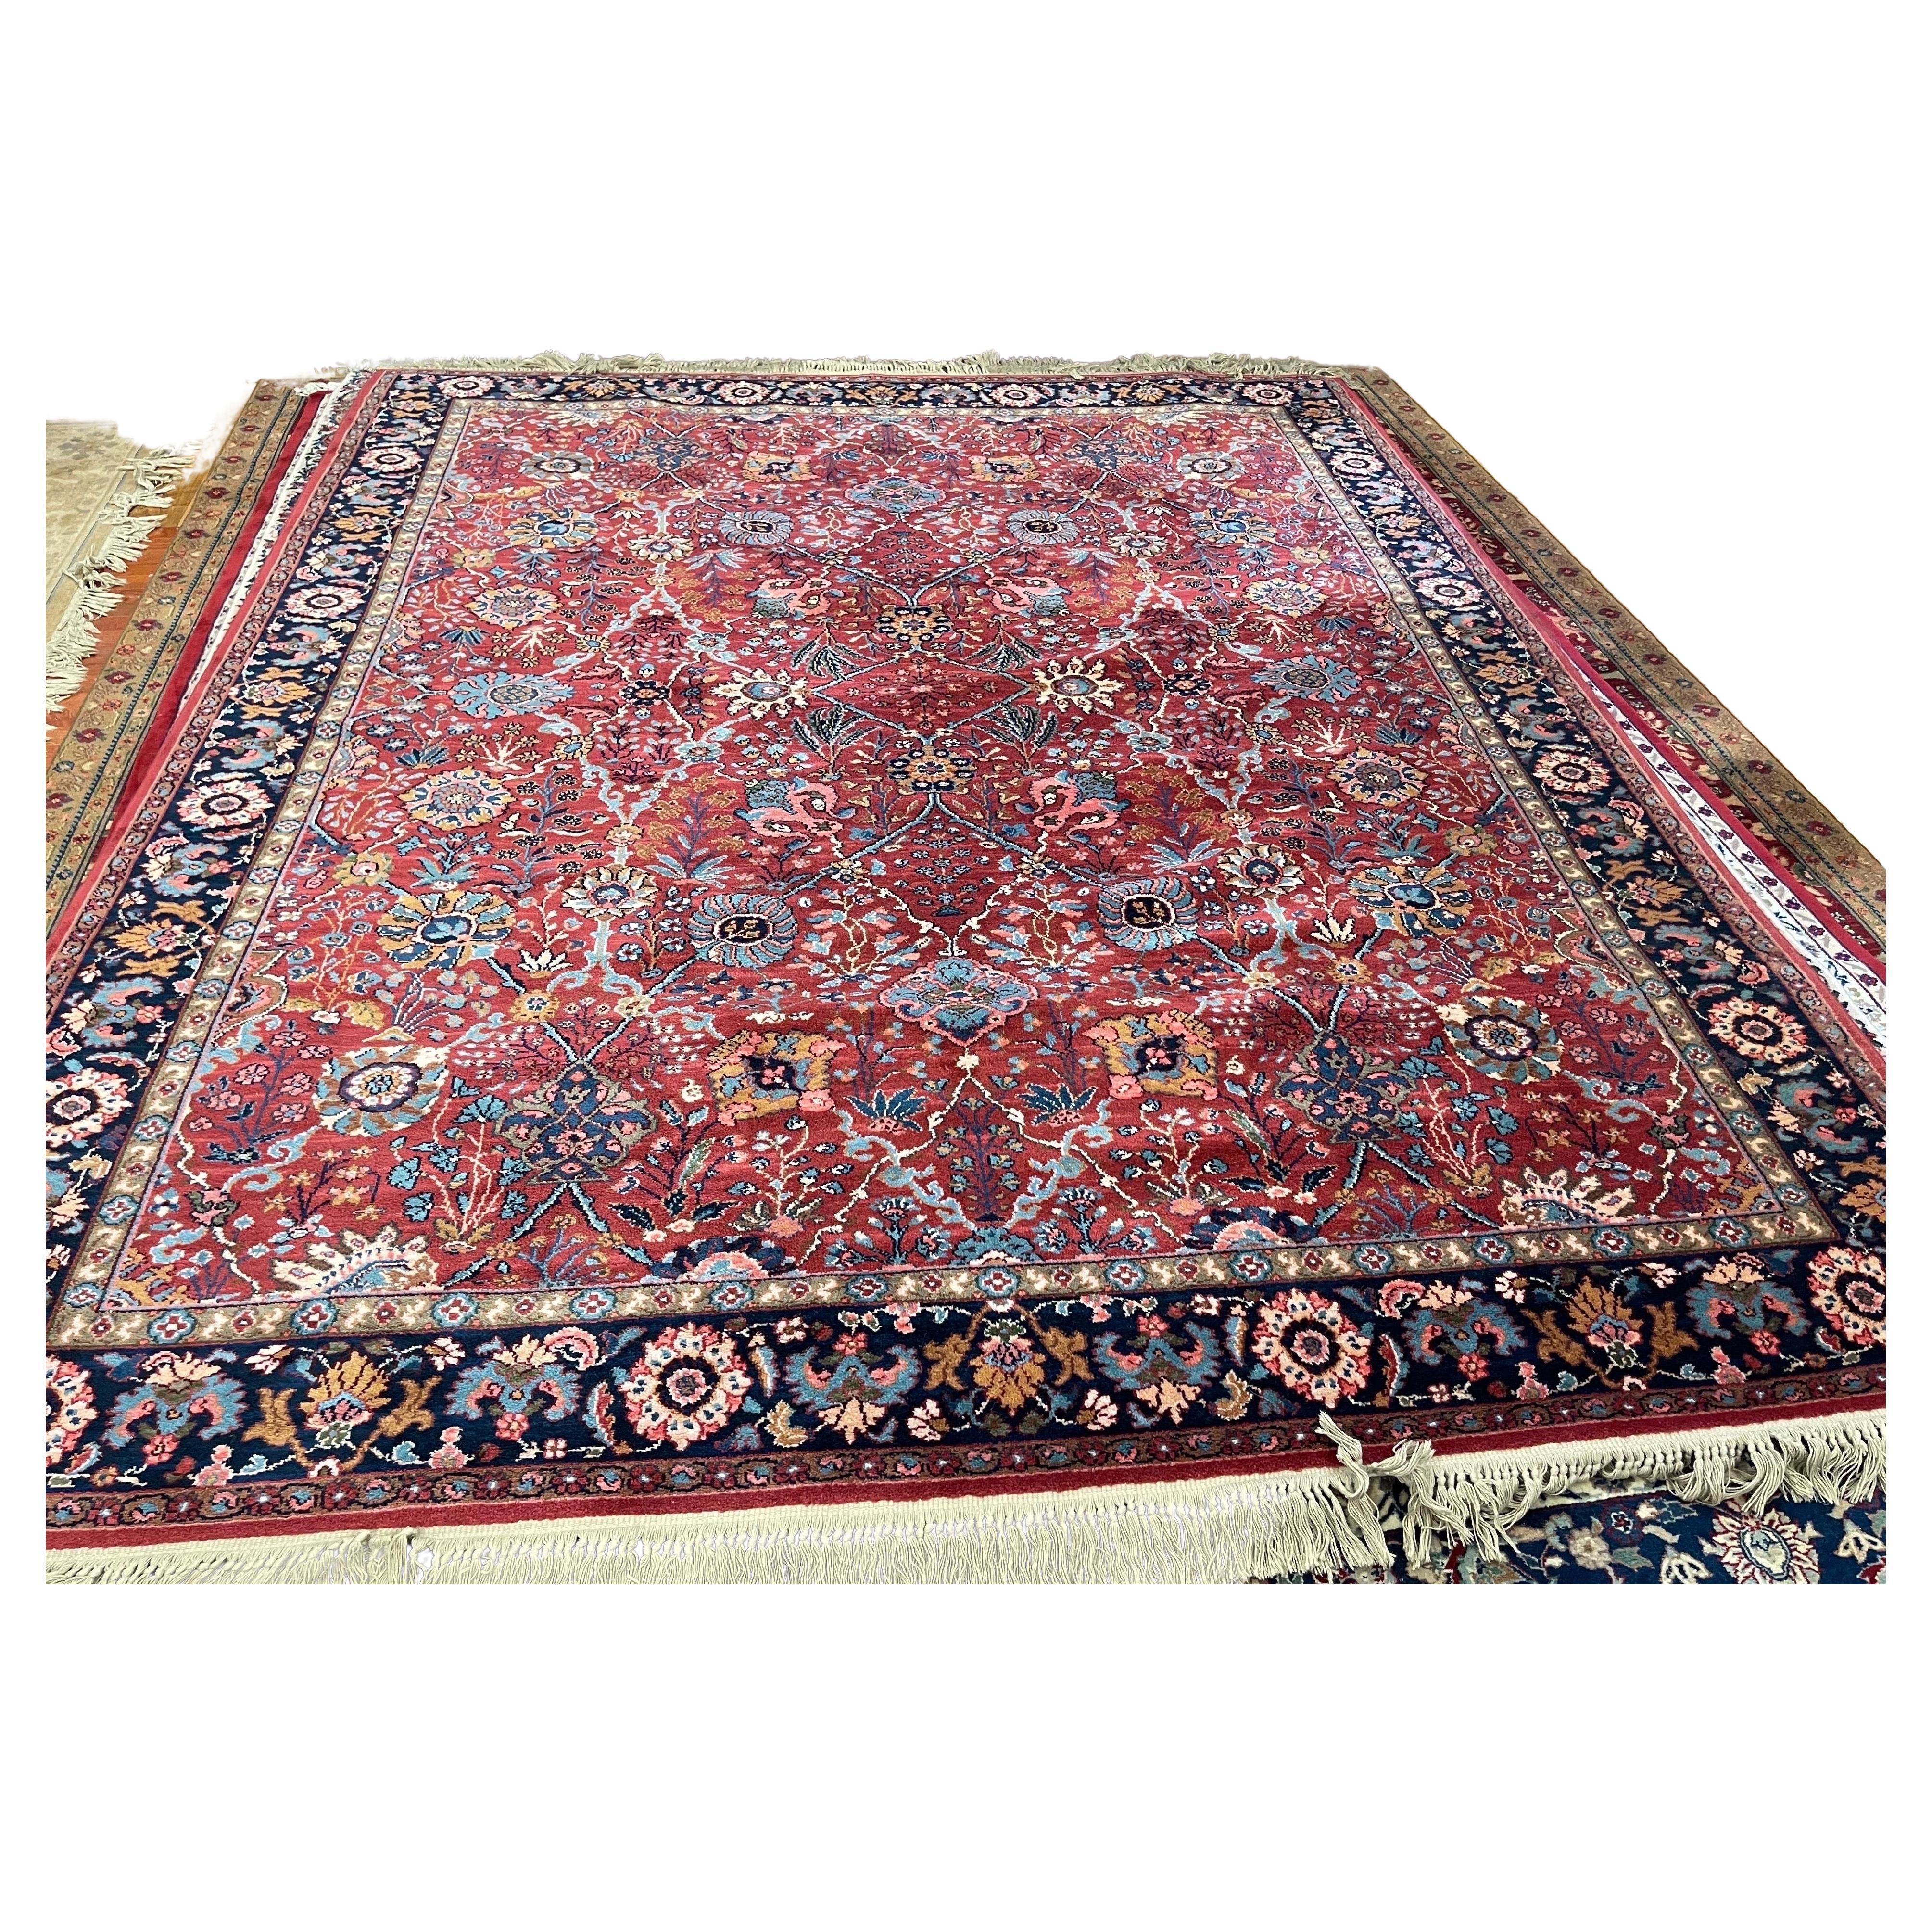 Original Karastan Collection Wool Rug with Rare Ispahan Pattern 8'8" by 10'6"